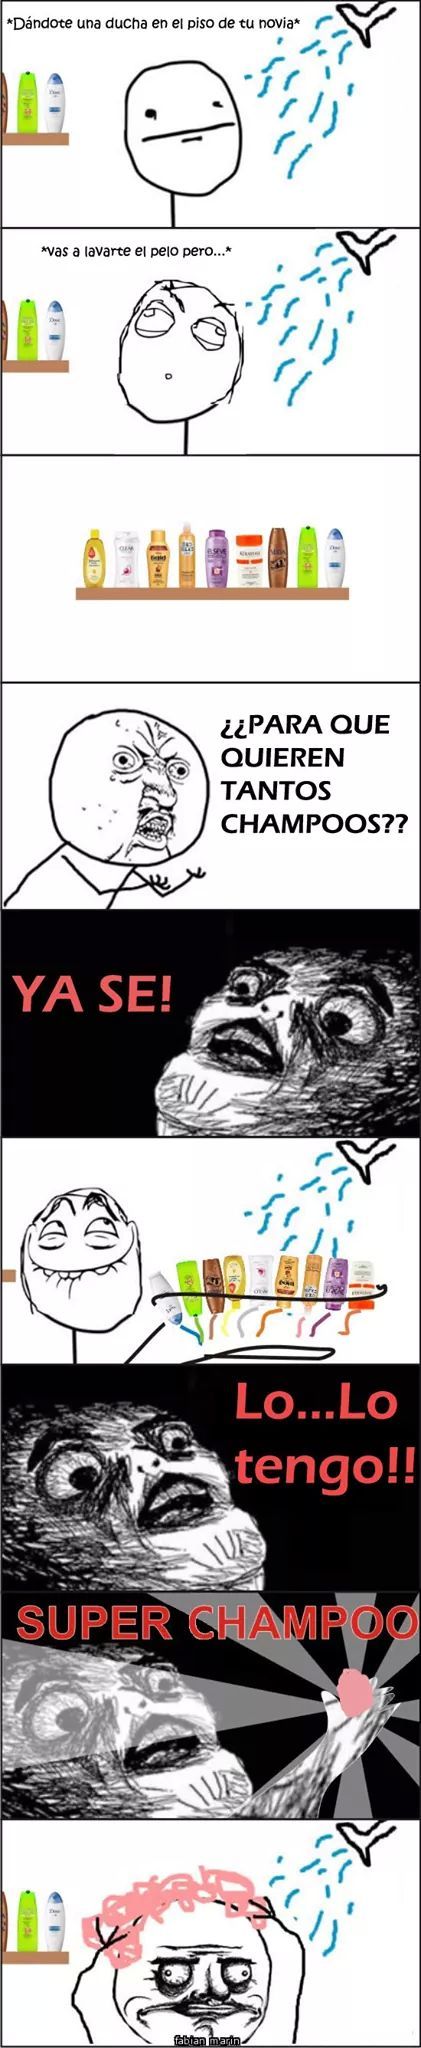 supershampoo! - meme